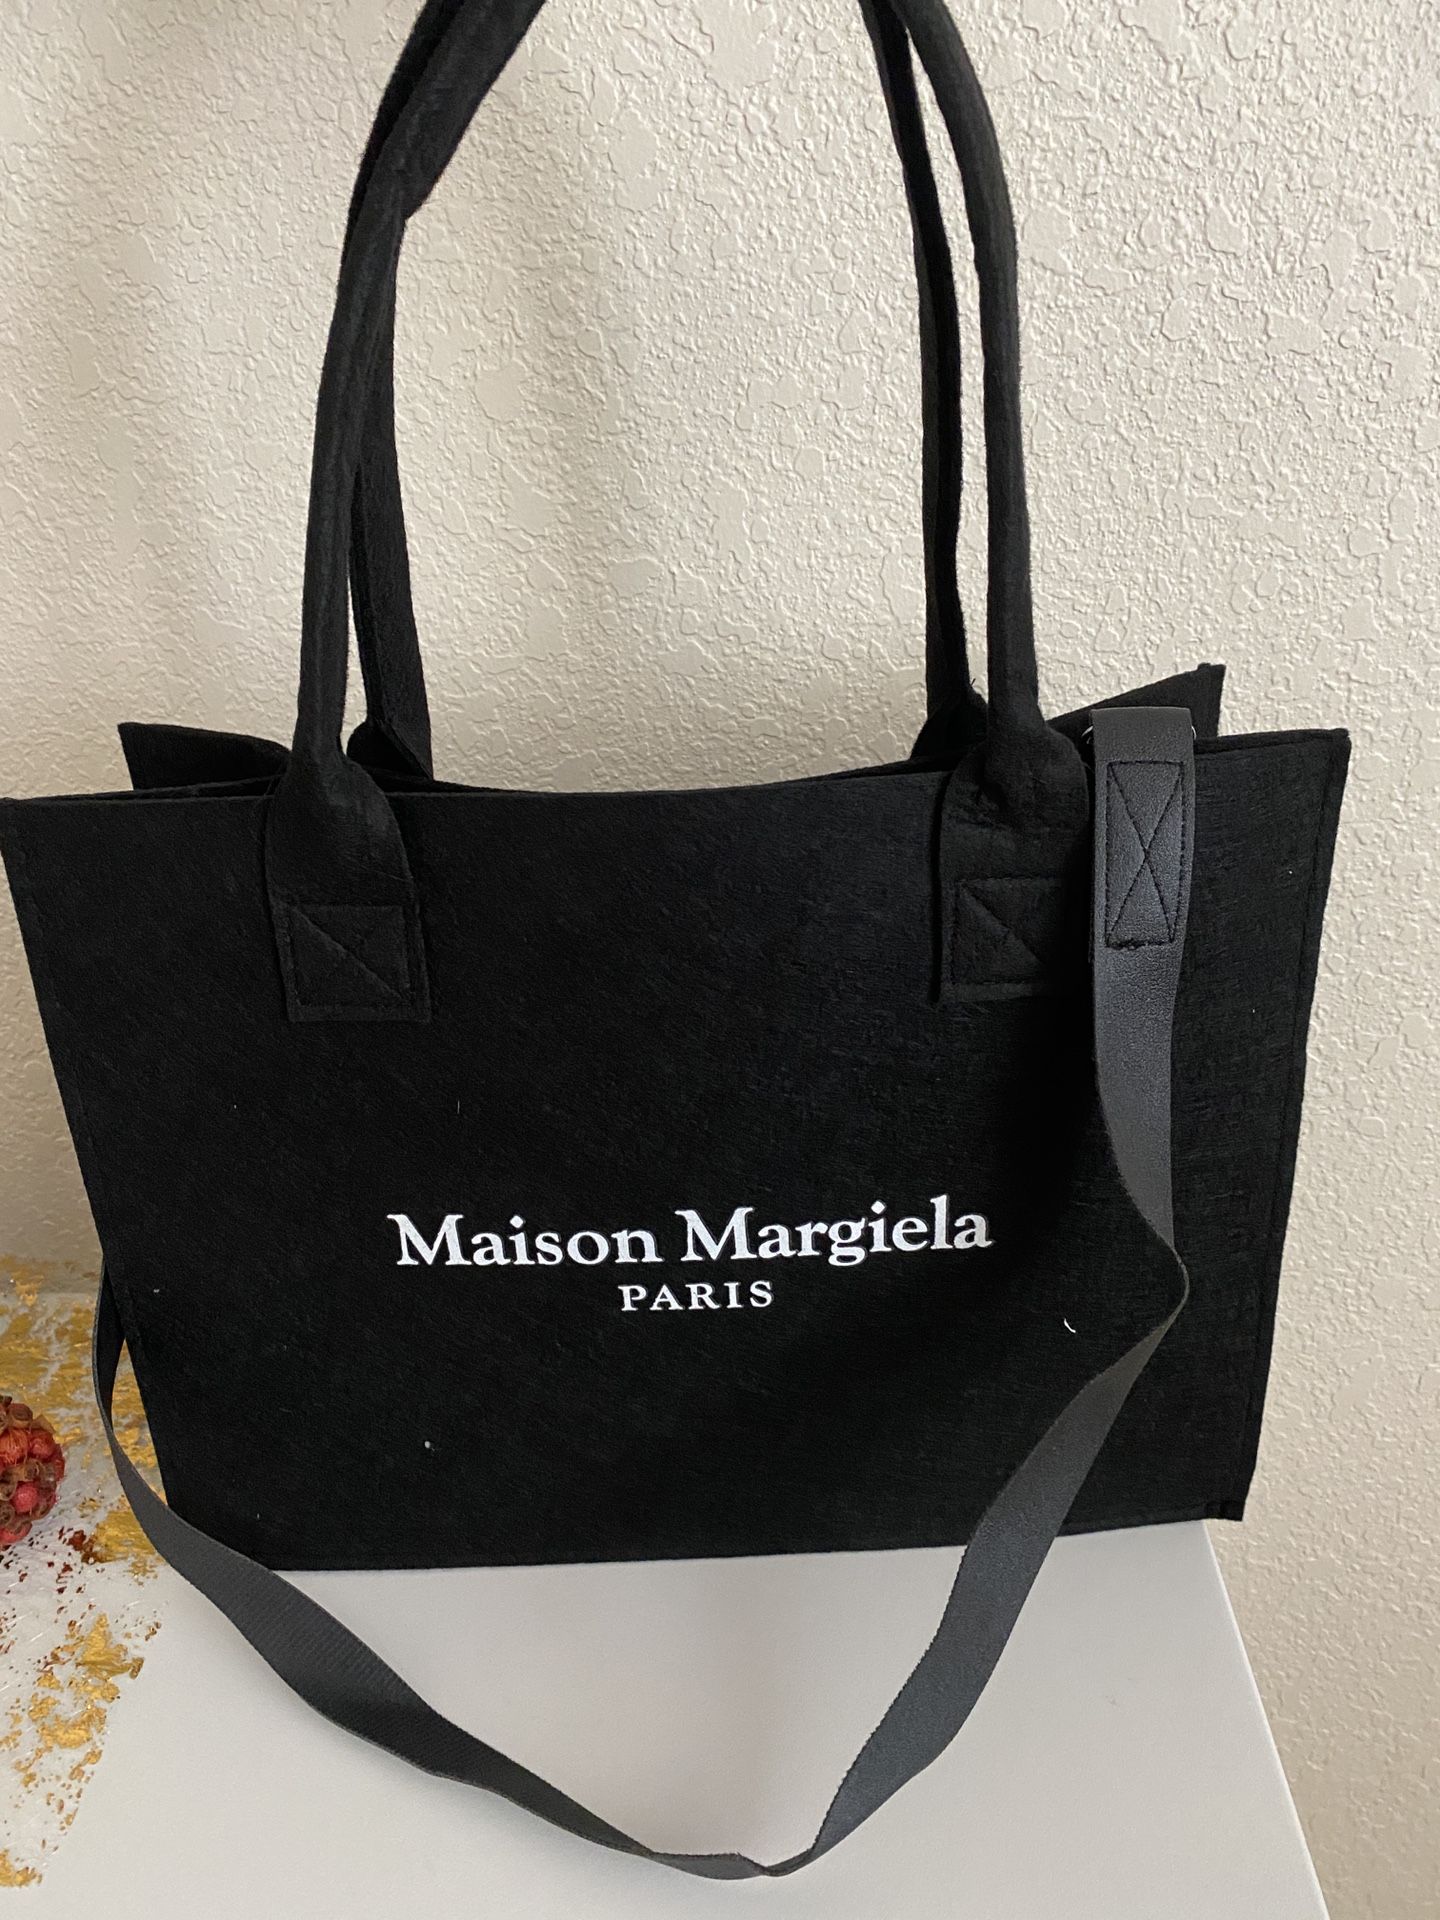 Maison Margiela Black Tote Bag 